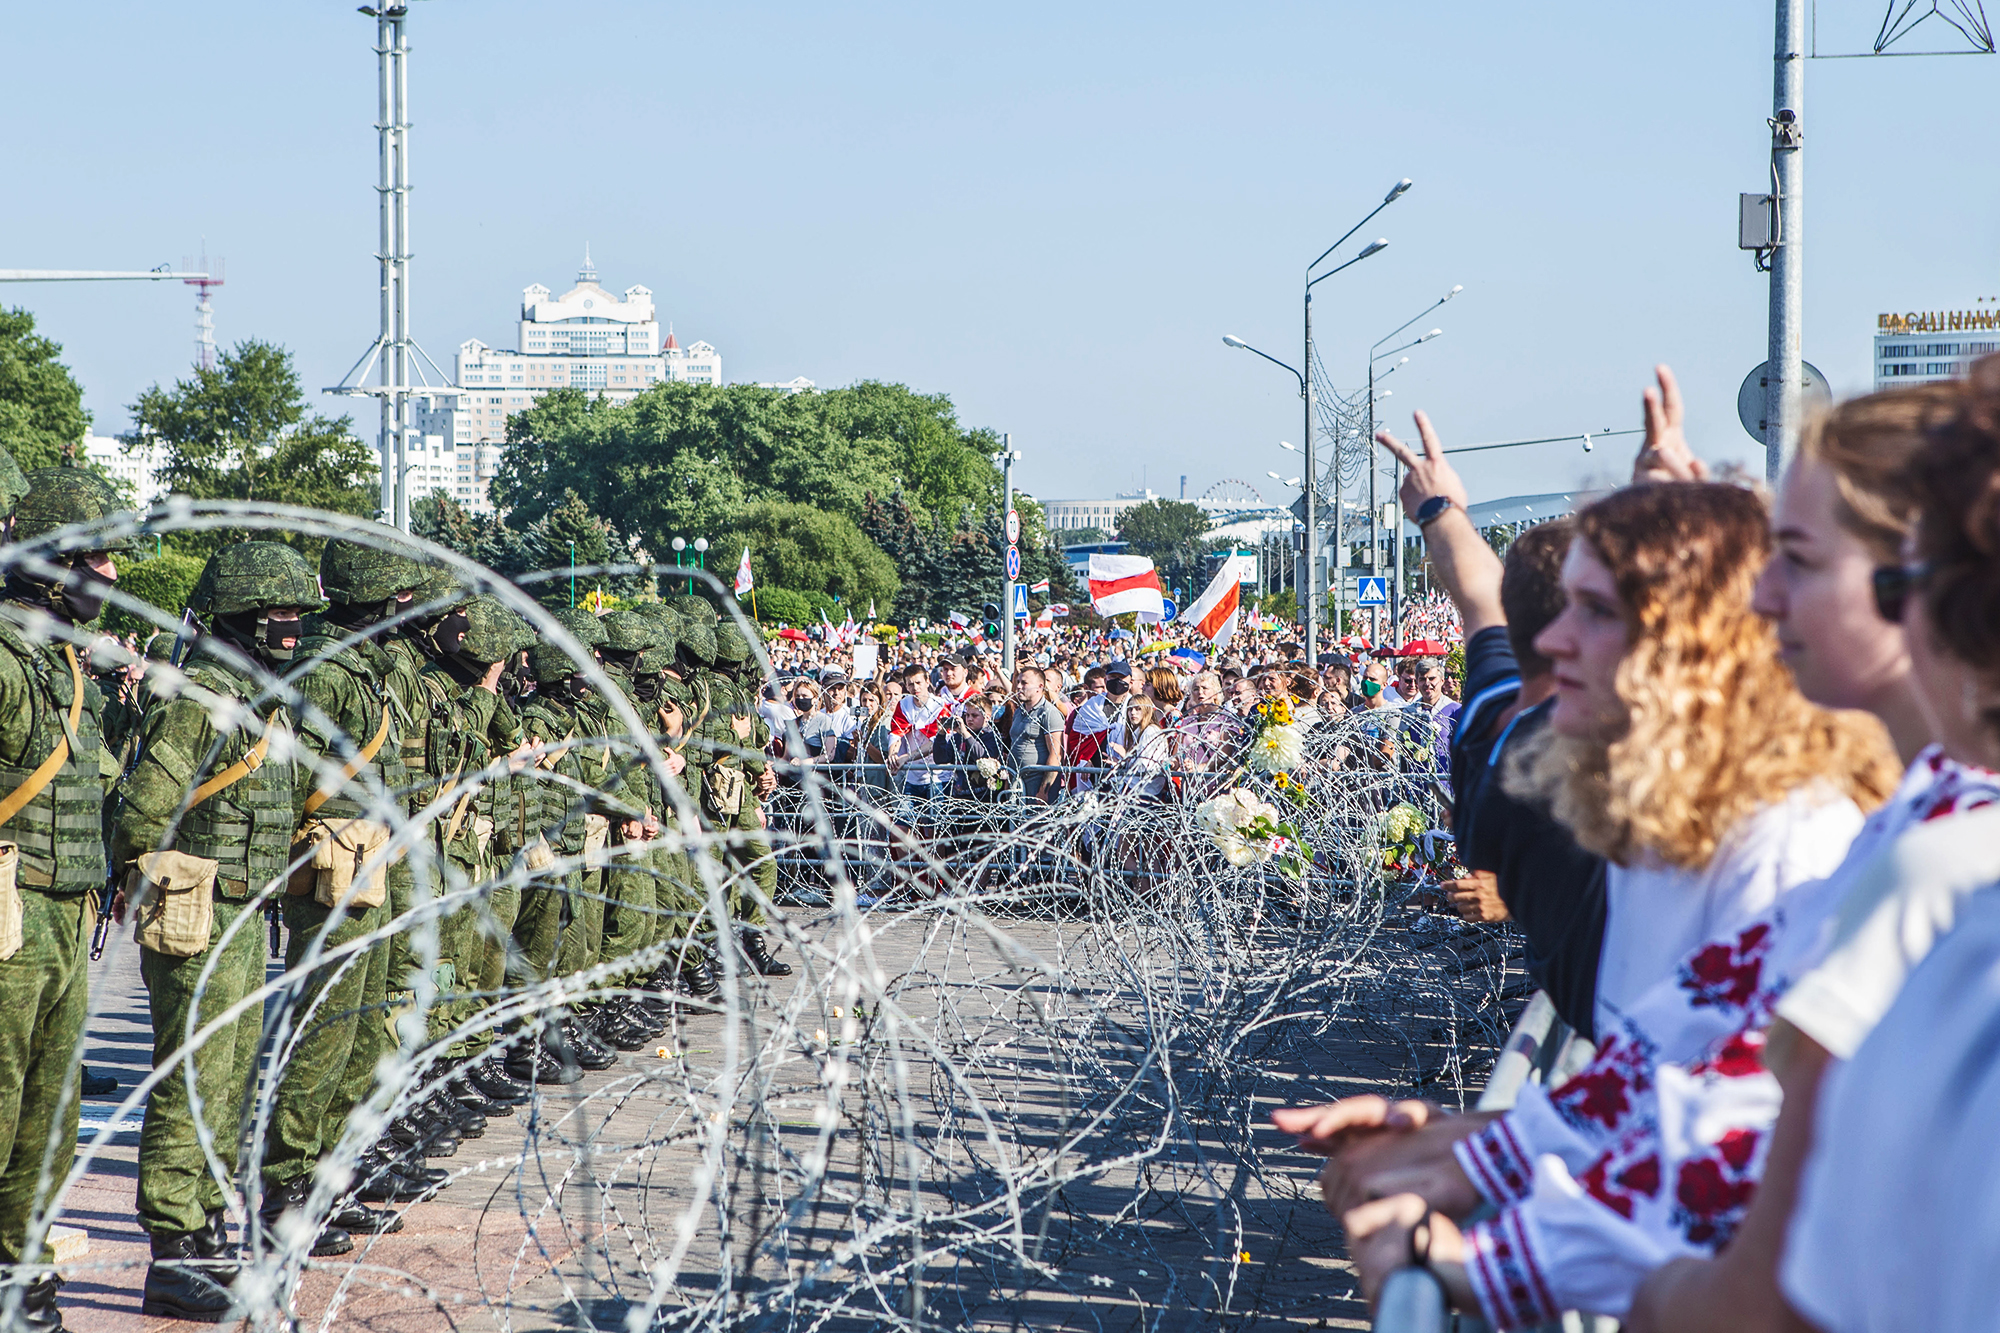 Nach der Demonstration vor dem Denkmal "Stele". Minsk, August 2020.